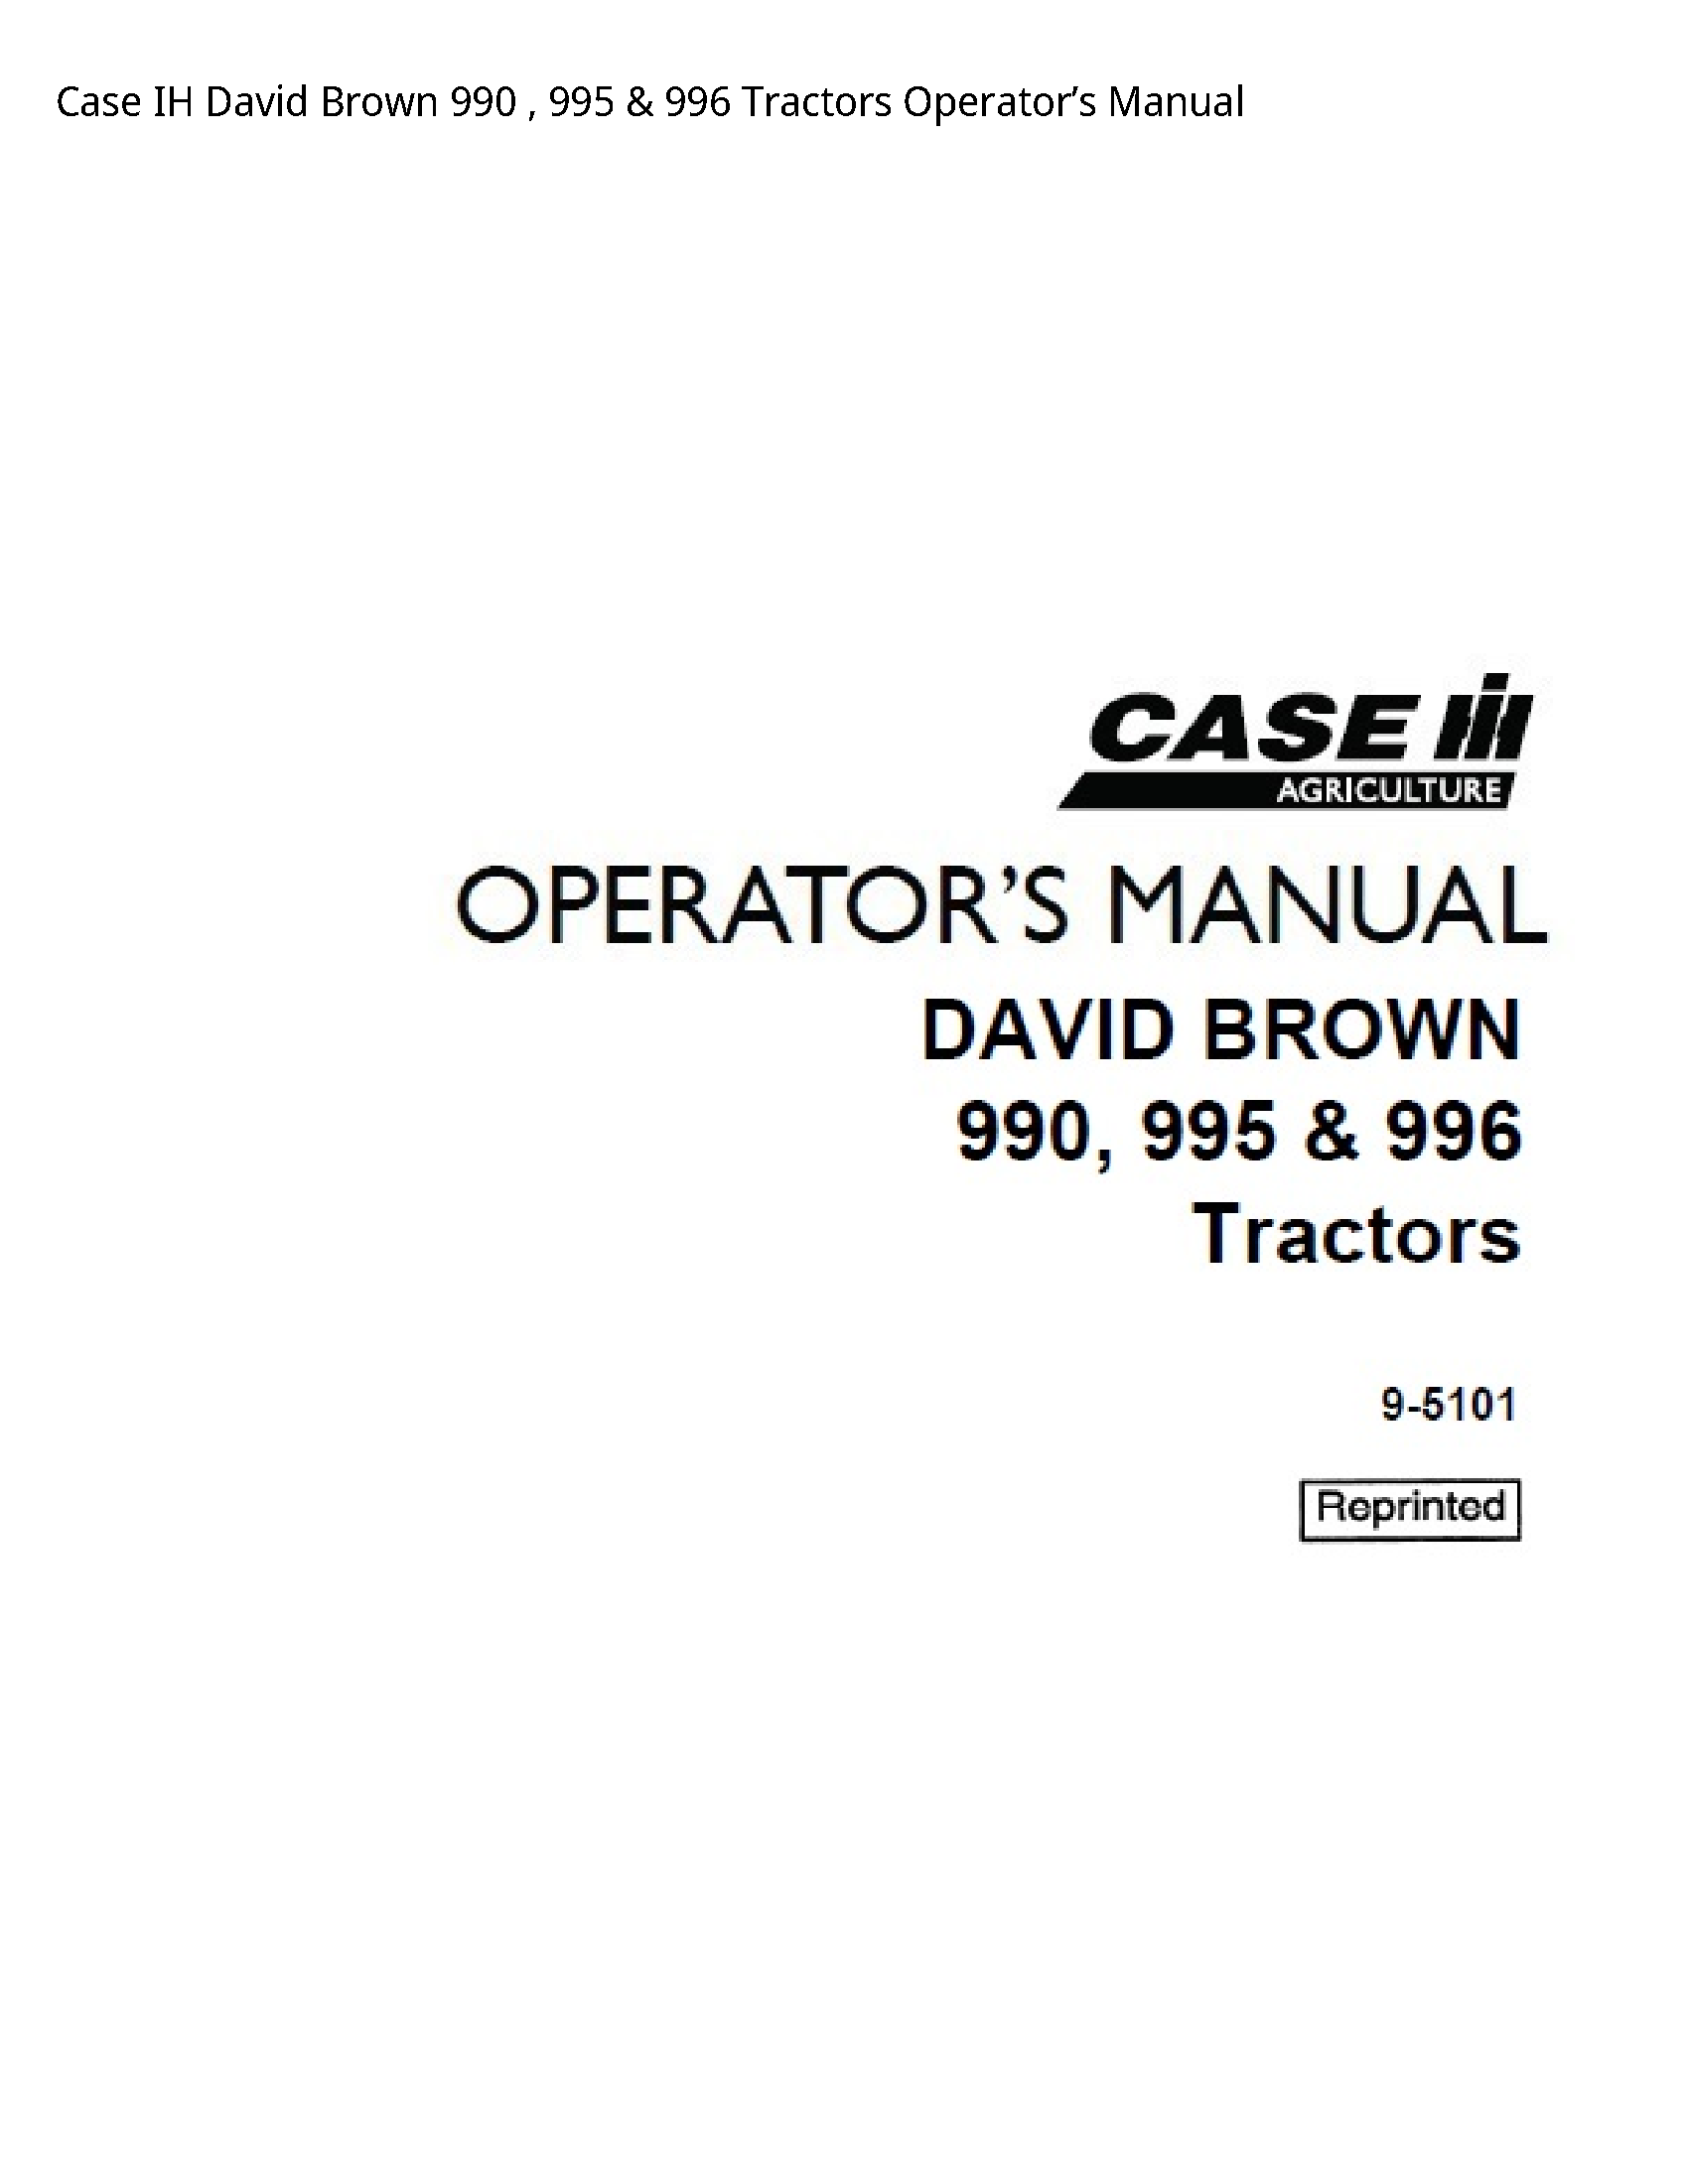 Case/Case IH 990 IH David Brown Tractors Operator’s manual